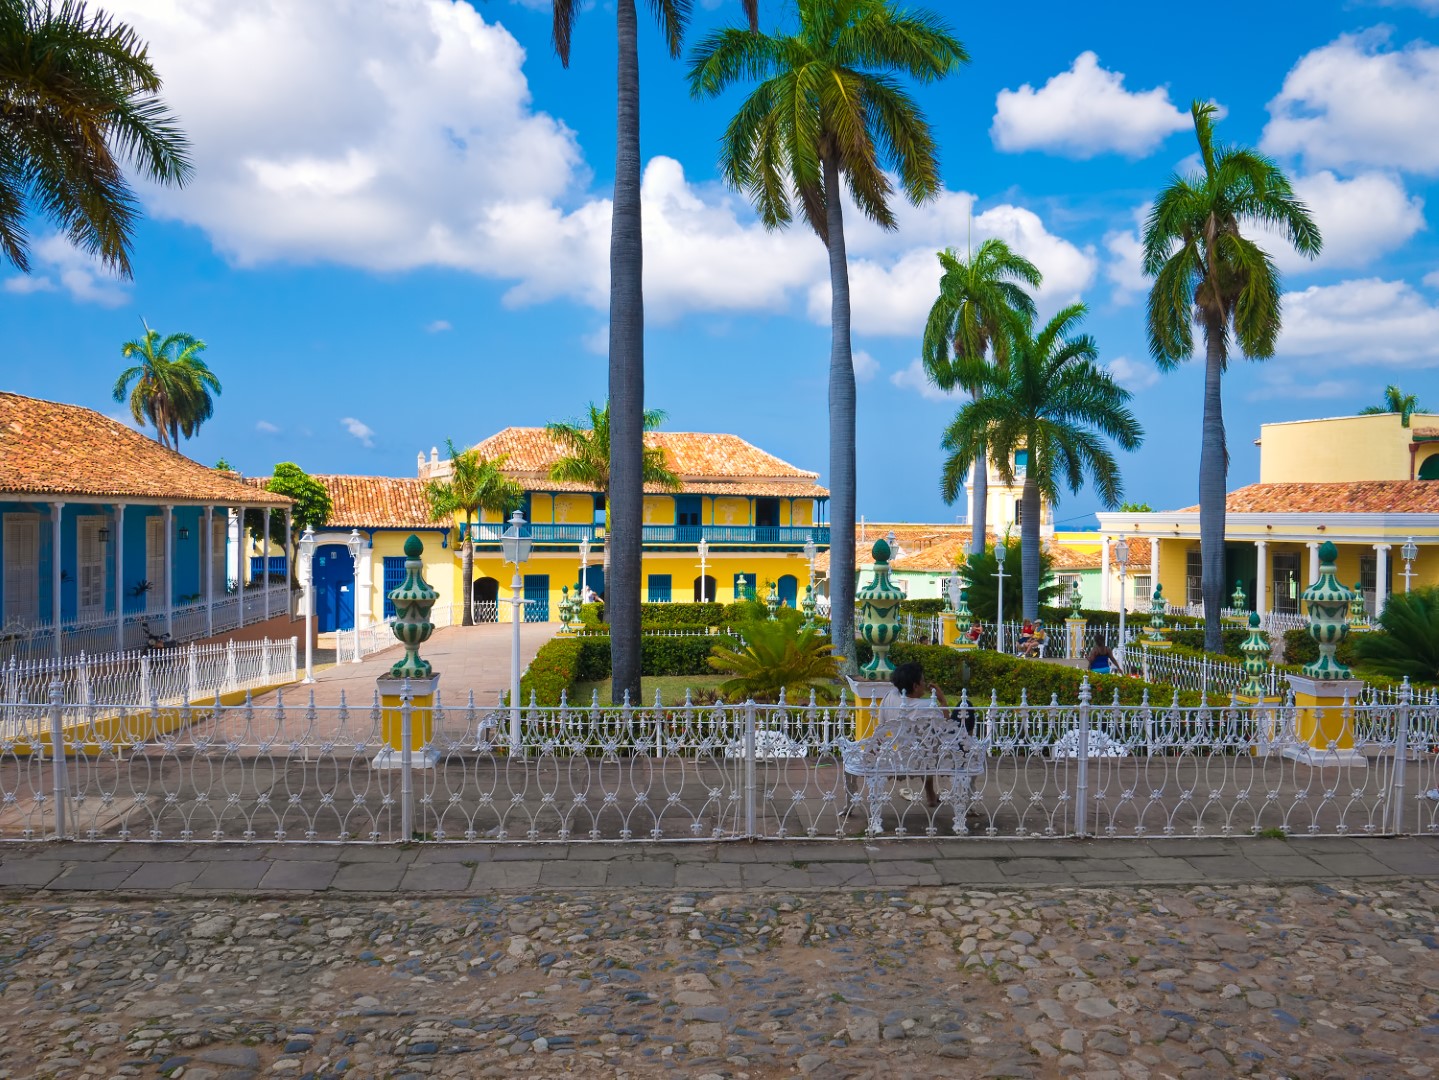 Playa Mayor in Trinidad, Cuba